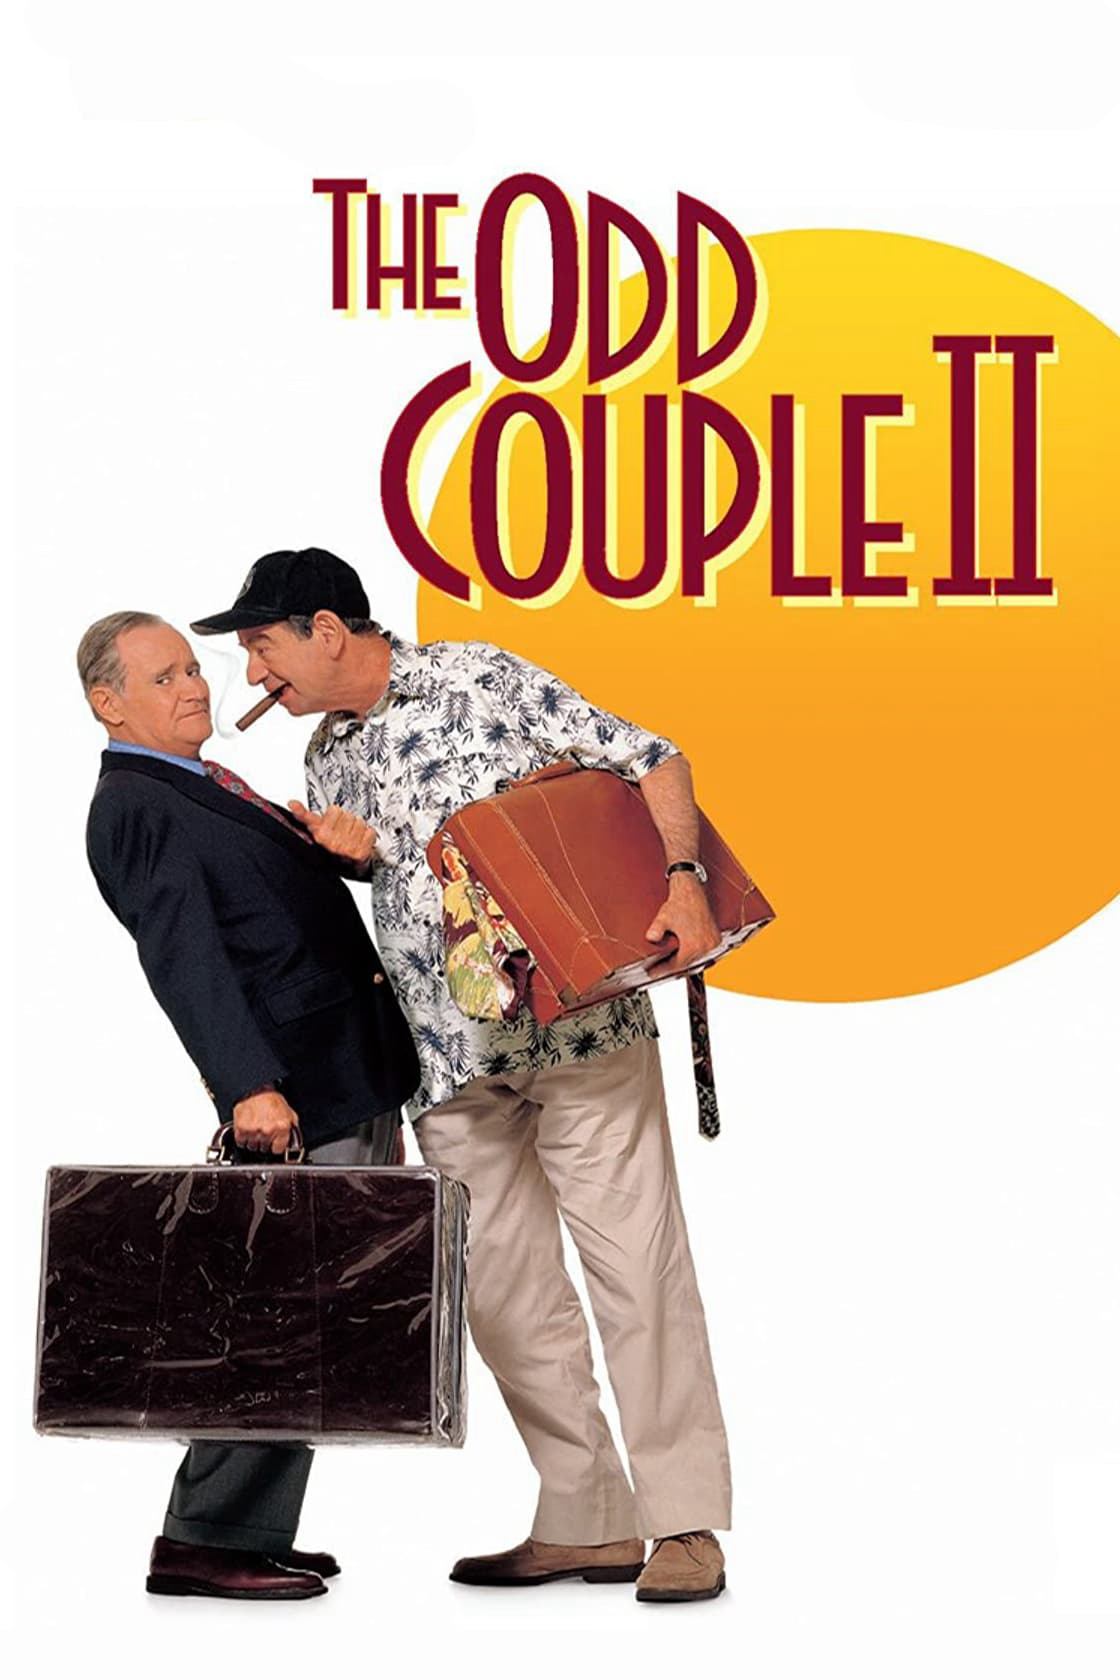 Poster Phim The Odd Couple II (The Odd Couple II)